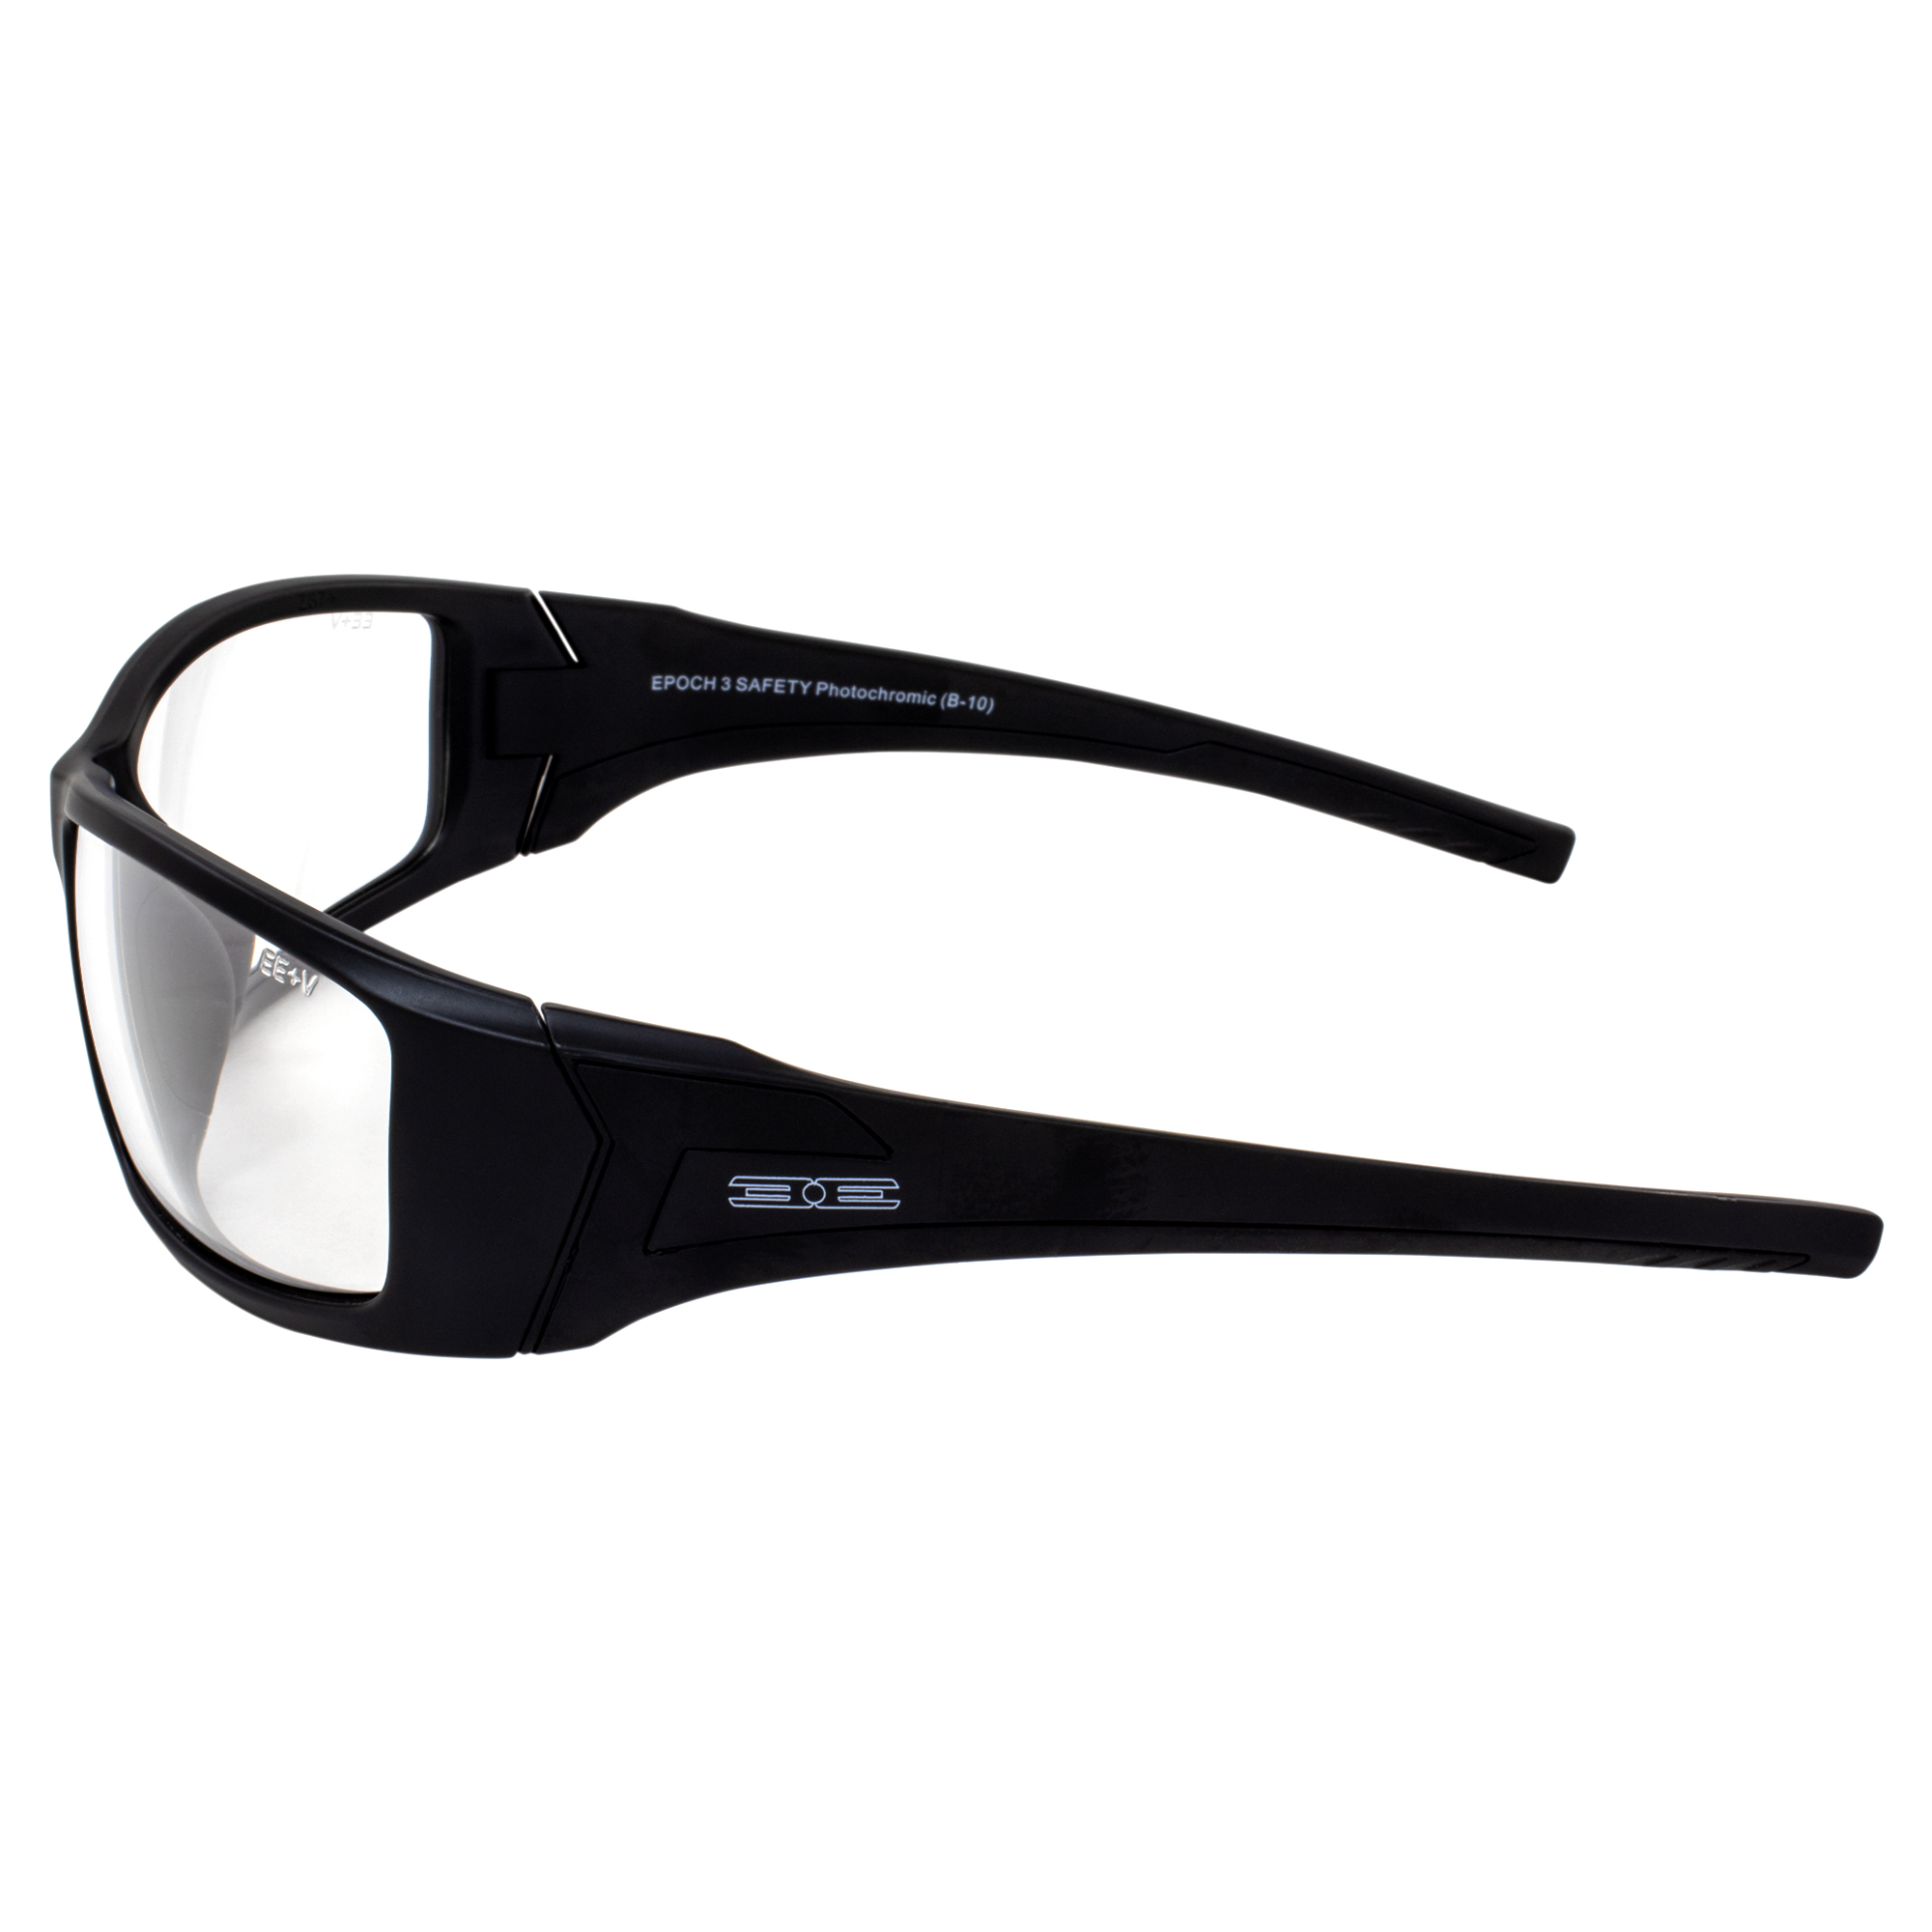 Epoch Eyewear EPOCH 3 Photochromic Motorcycle Sunglasses Black Frames Clear to Smoke lens - image 5 of 6